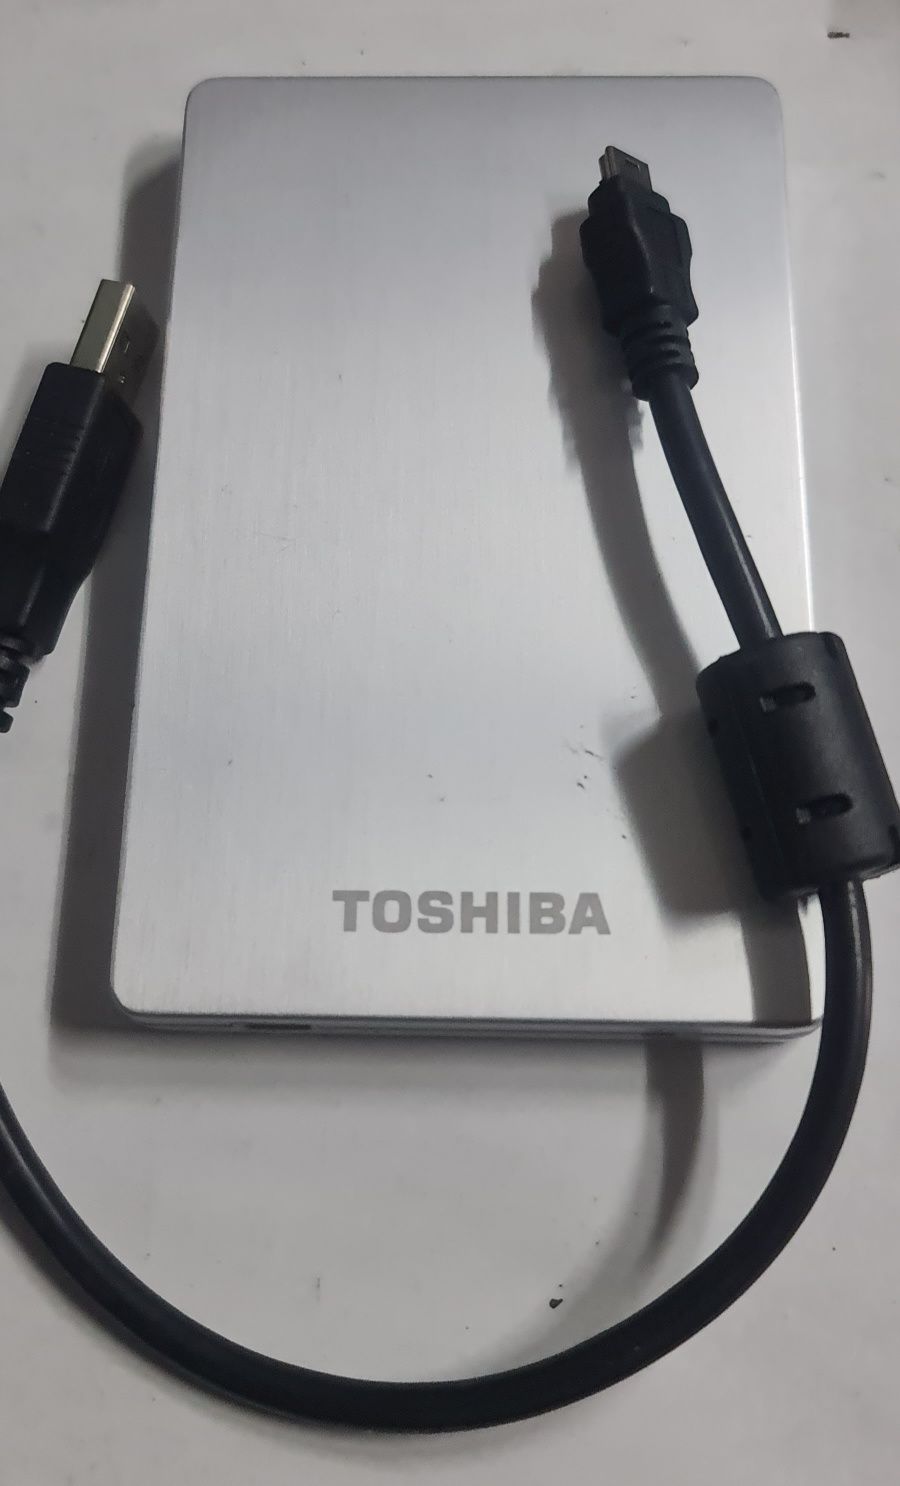 Disco externo Toshiba